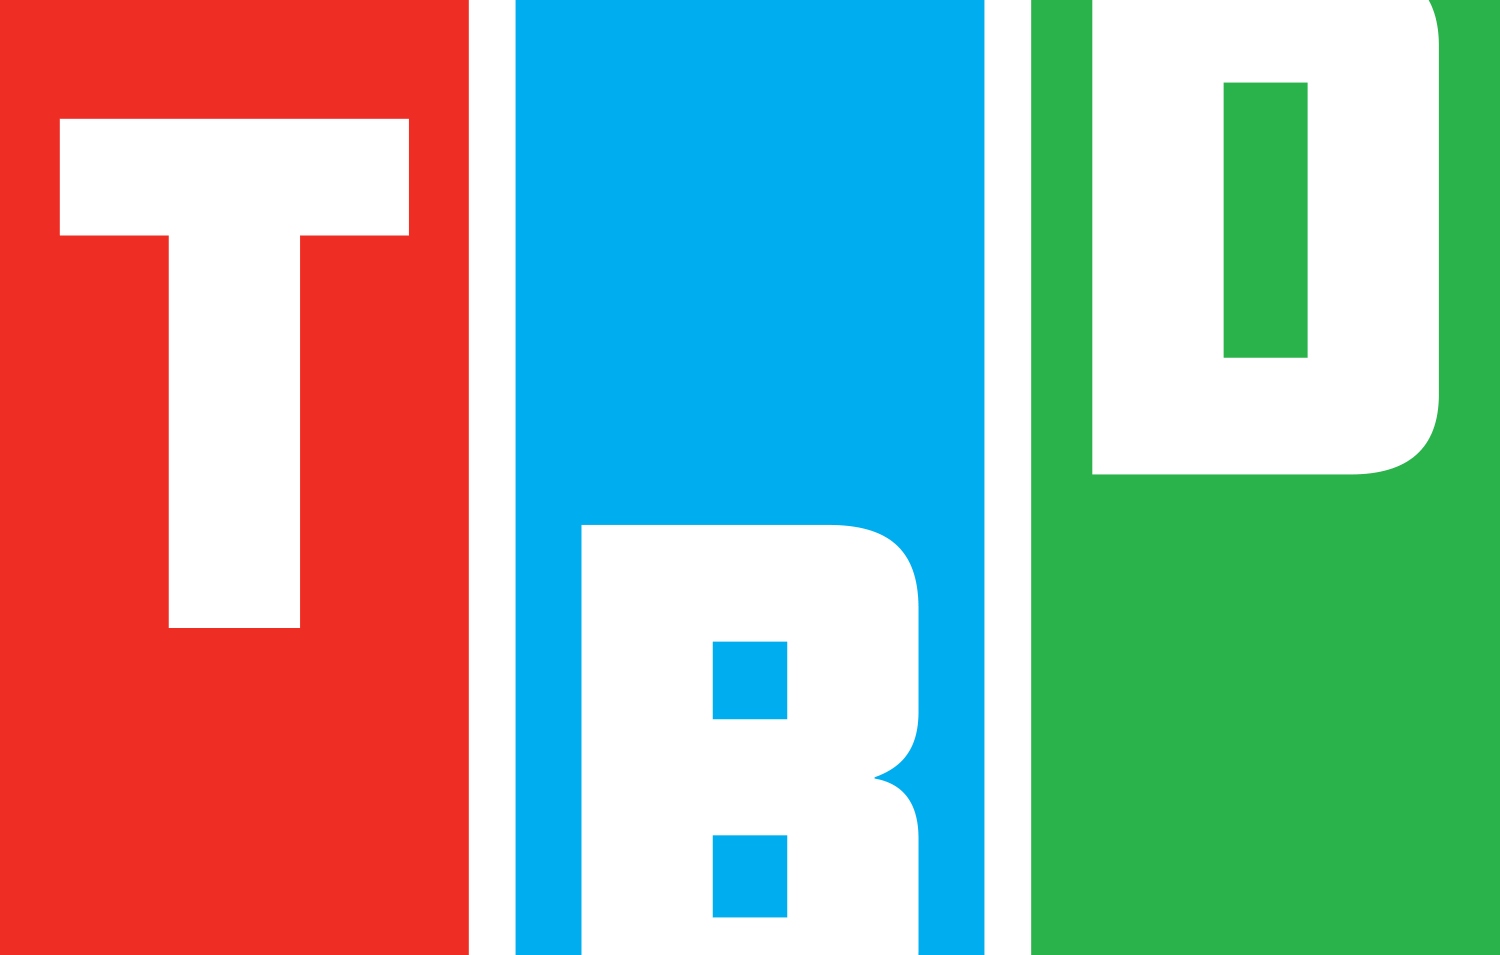 TBD Logo - TBD (TV network)